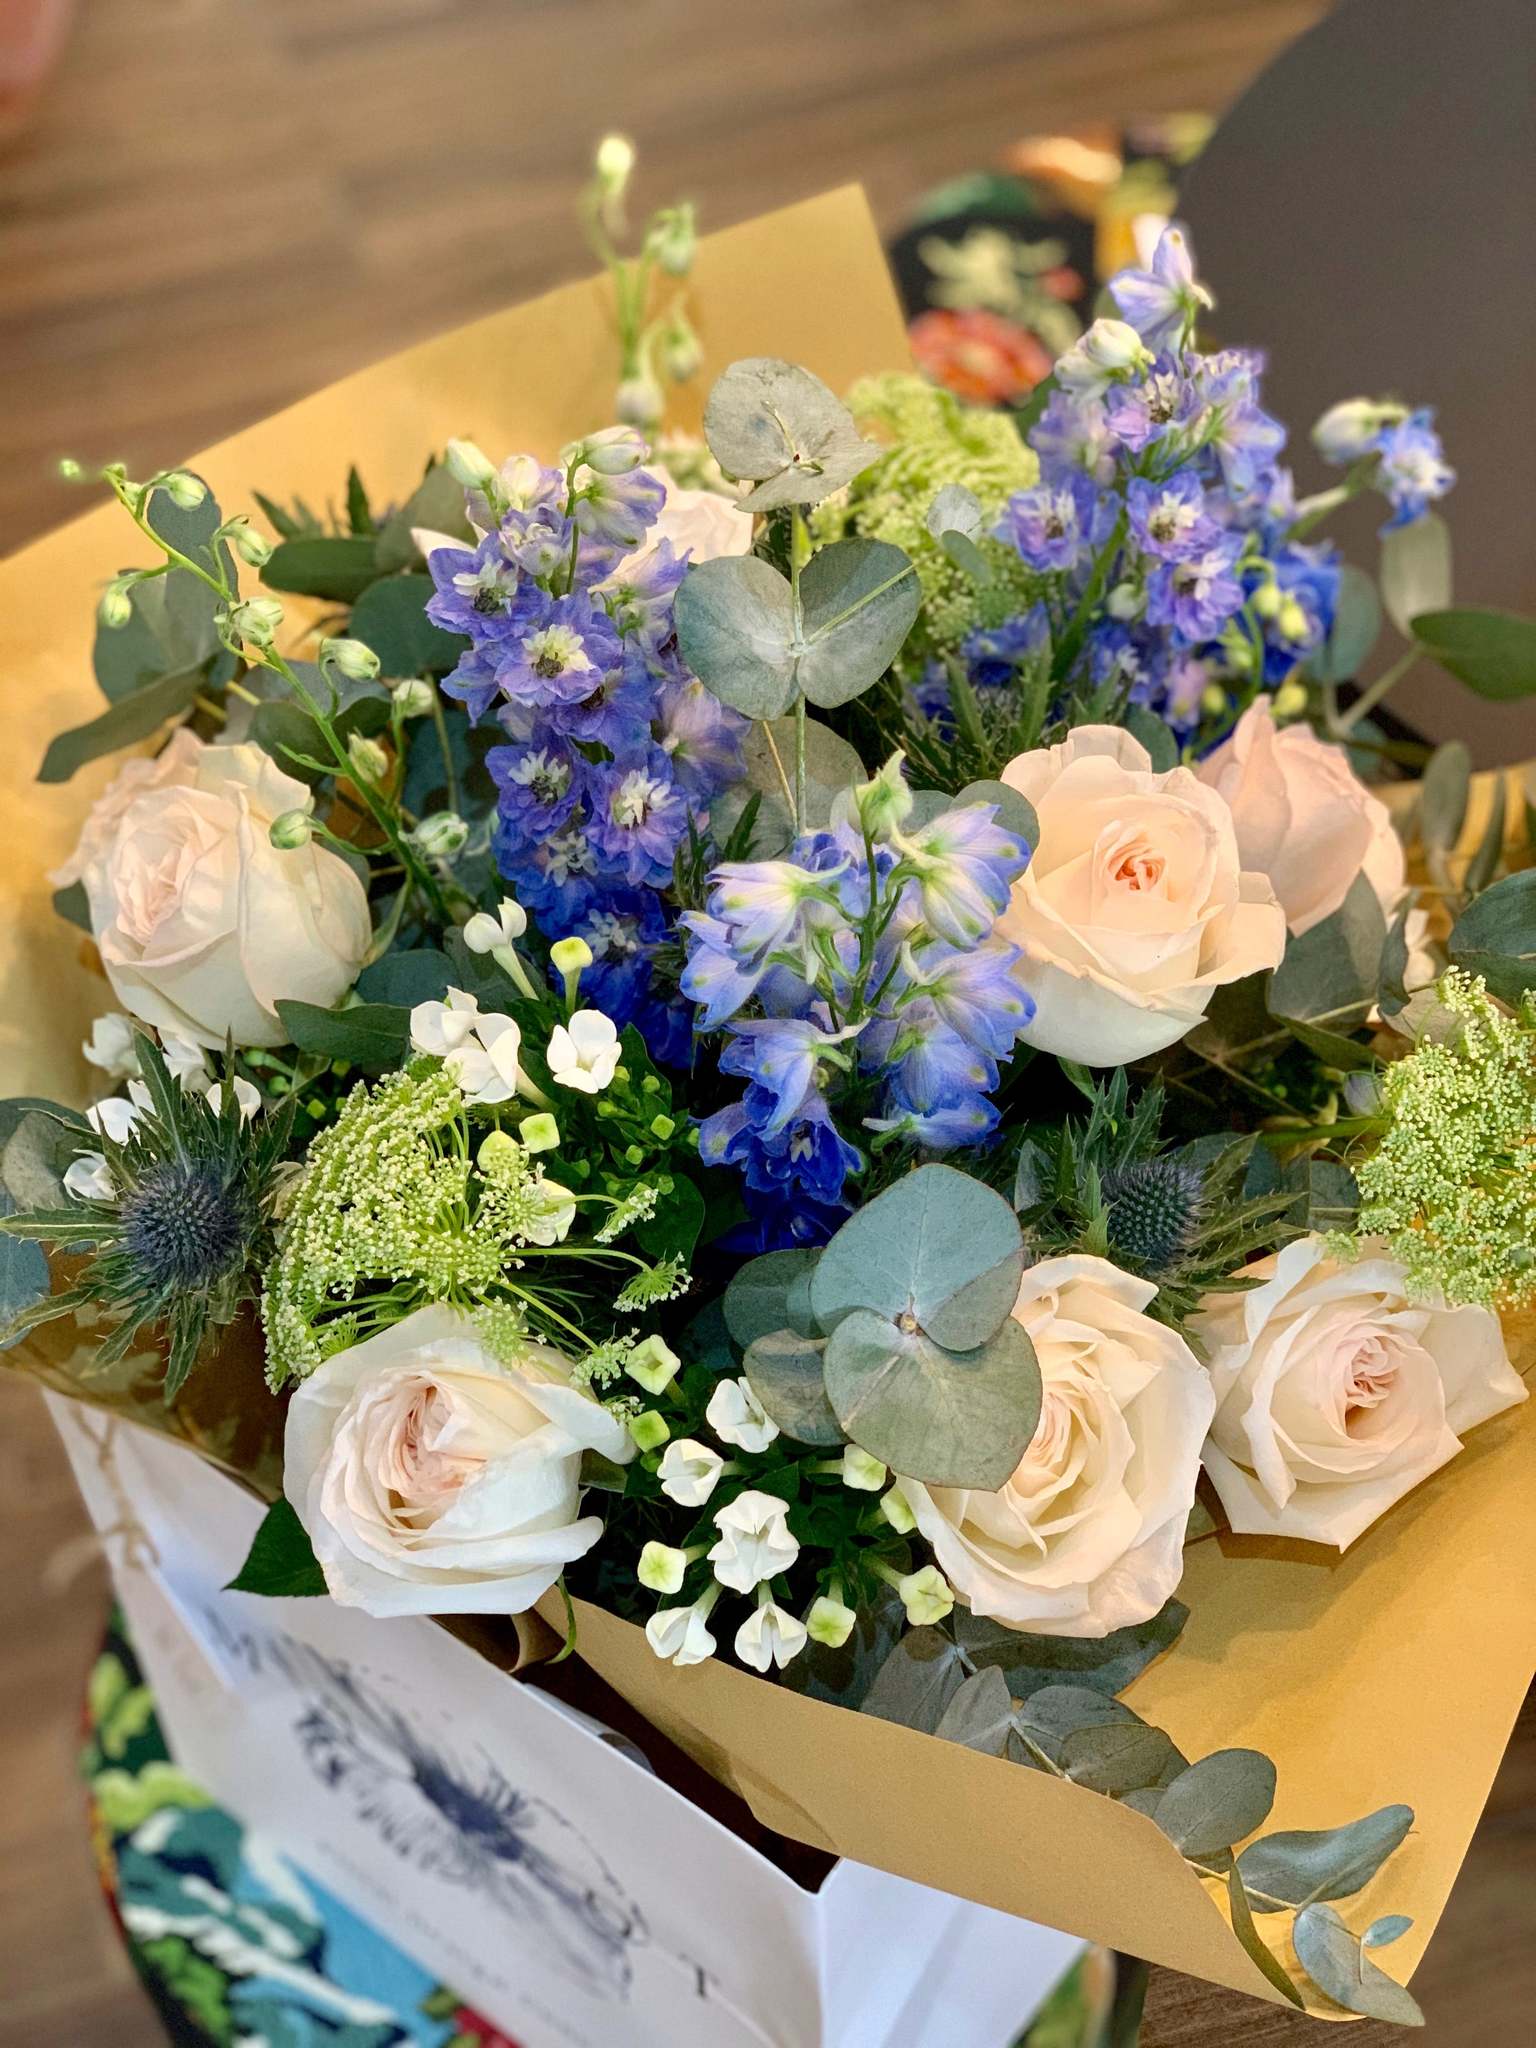 Margot bouquet by Margot Floral Design. A fresh flower bouquet composed of White O'Hara Garden Roses, Blue Delphinium, White Bouvardia, Ammi, and Eucalyptus.